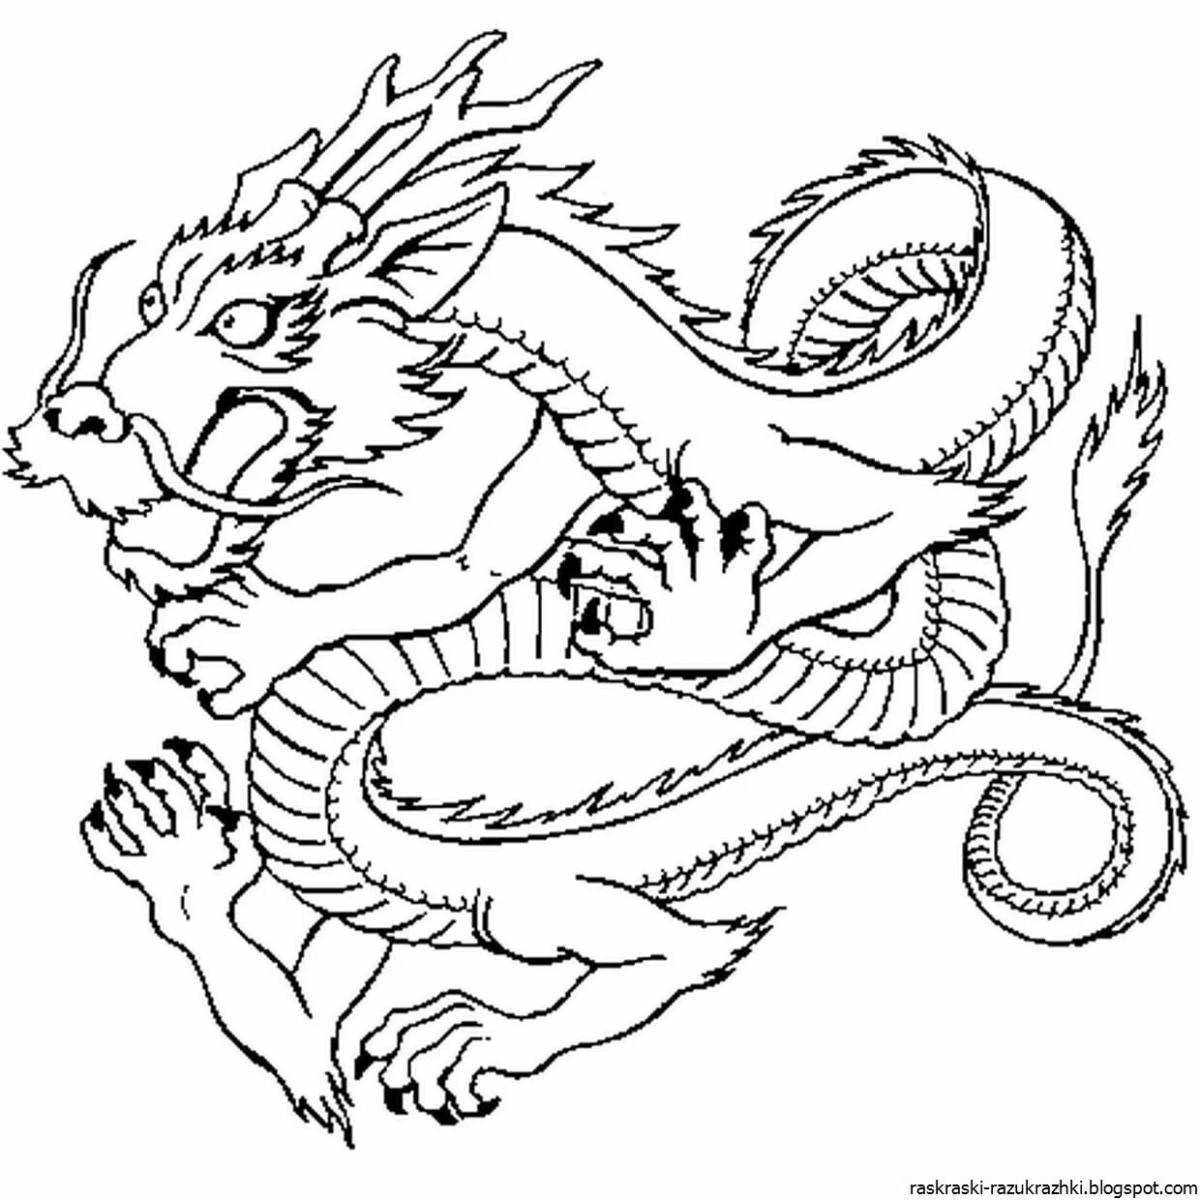 Coloring book shining japanese dragon